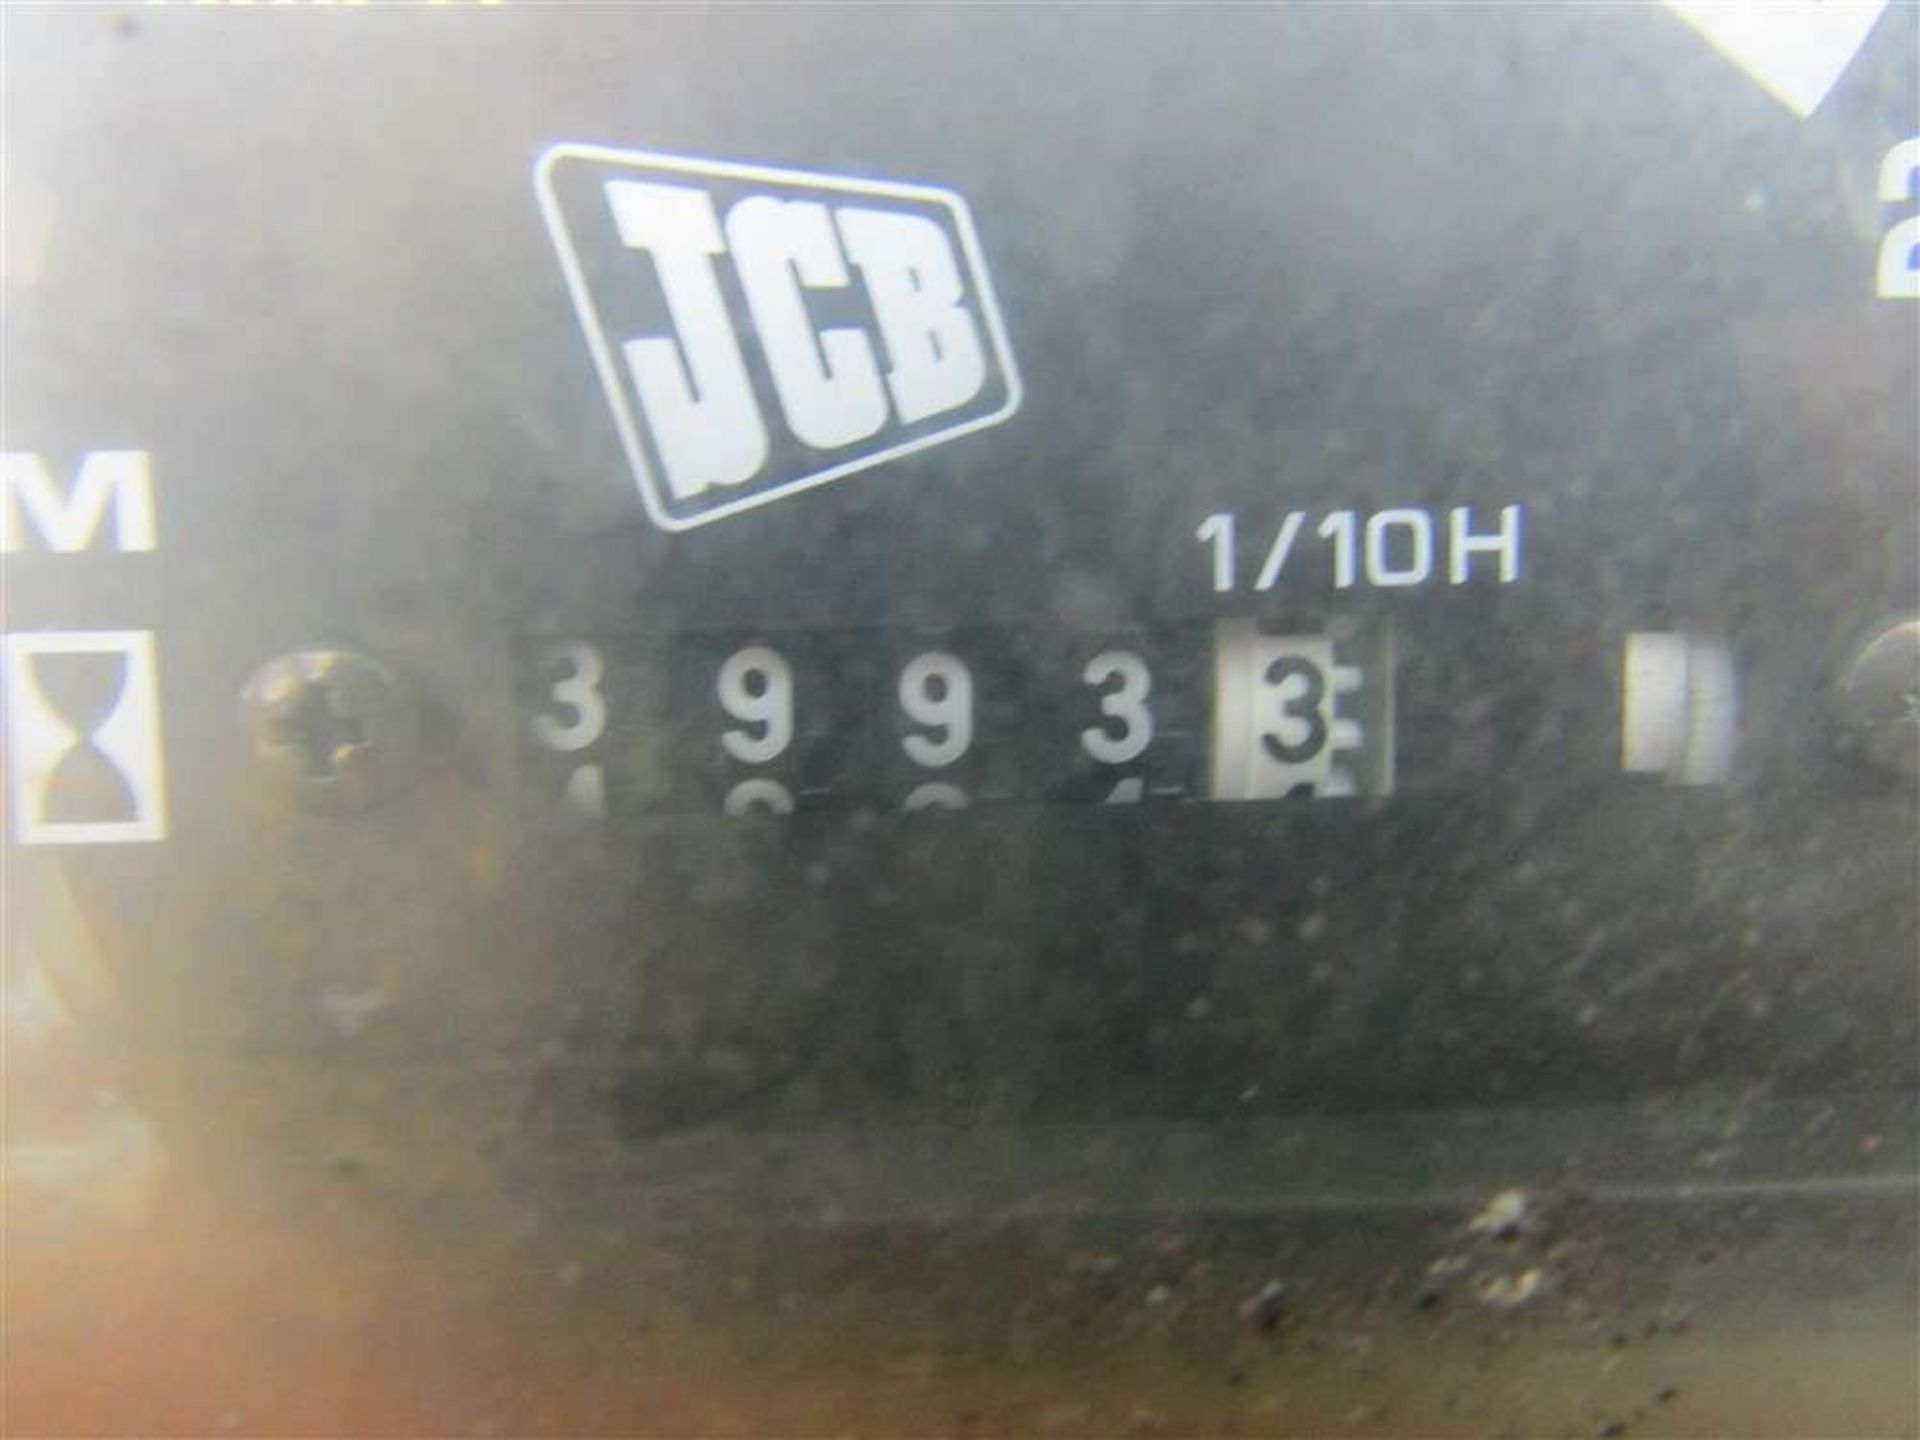 2001 X reg JCB 528-70 Loadall (Direct United Utilities) - Image 7 of 7